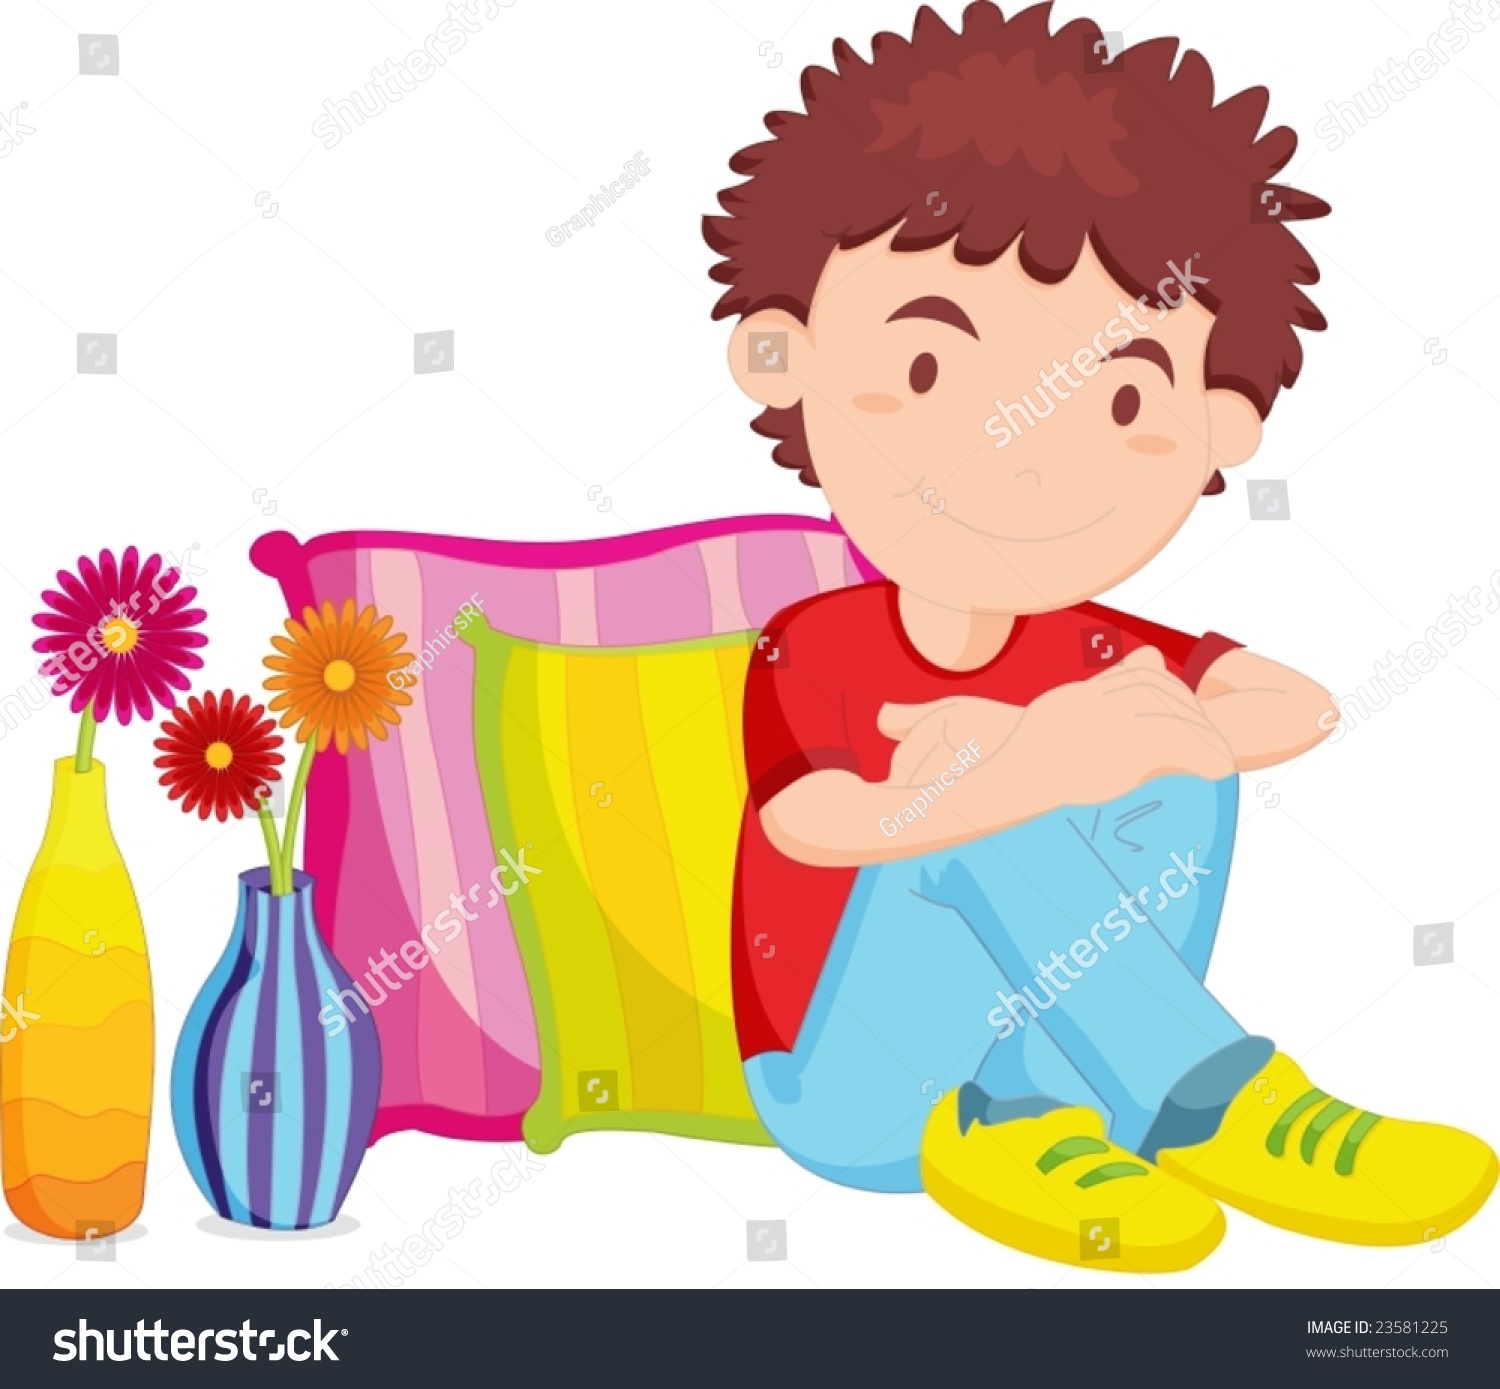 Illustration Of Boy Resting Against Two Pillows - 23581225 : Shutterstock